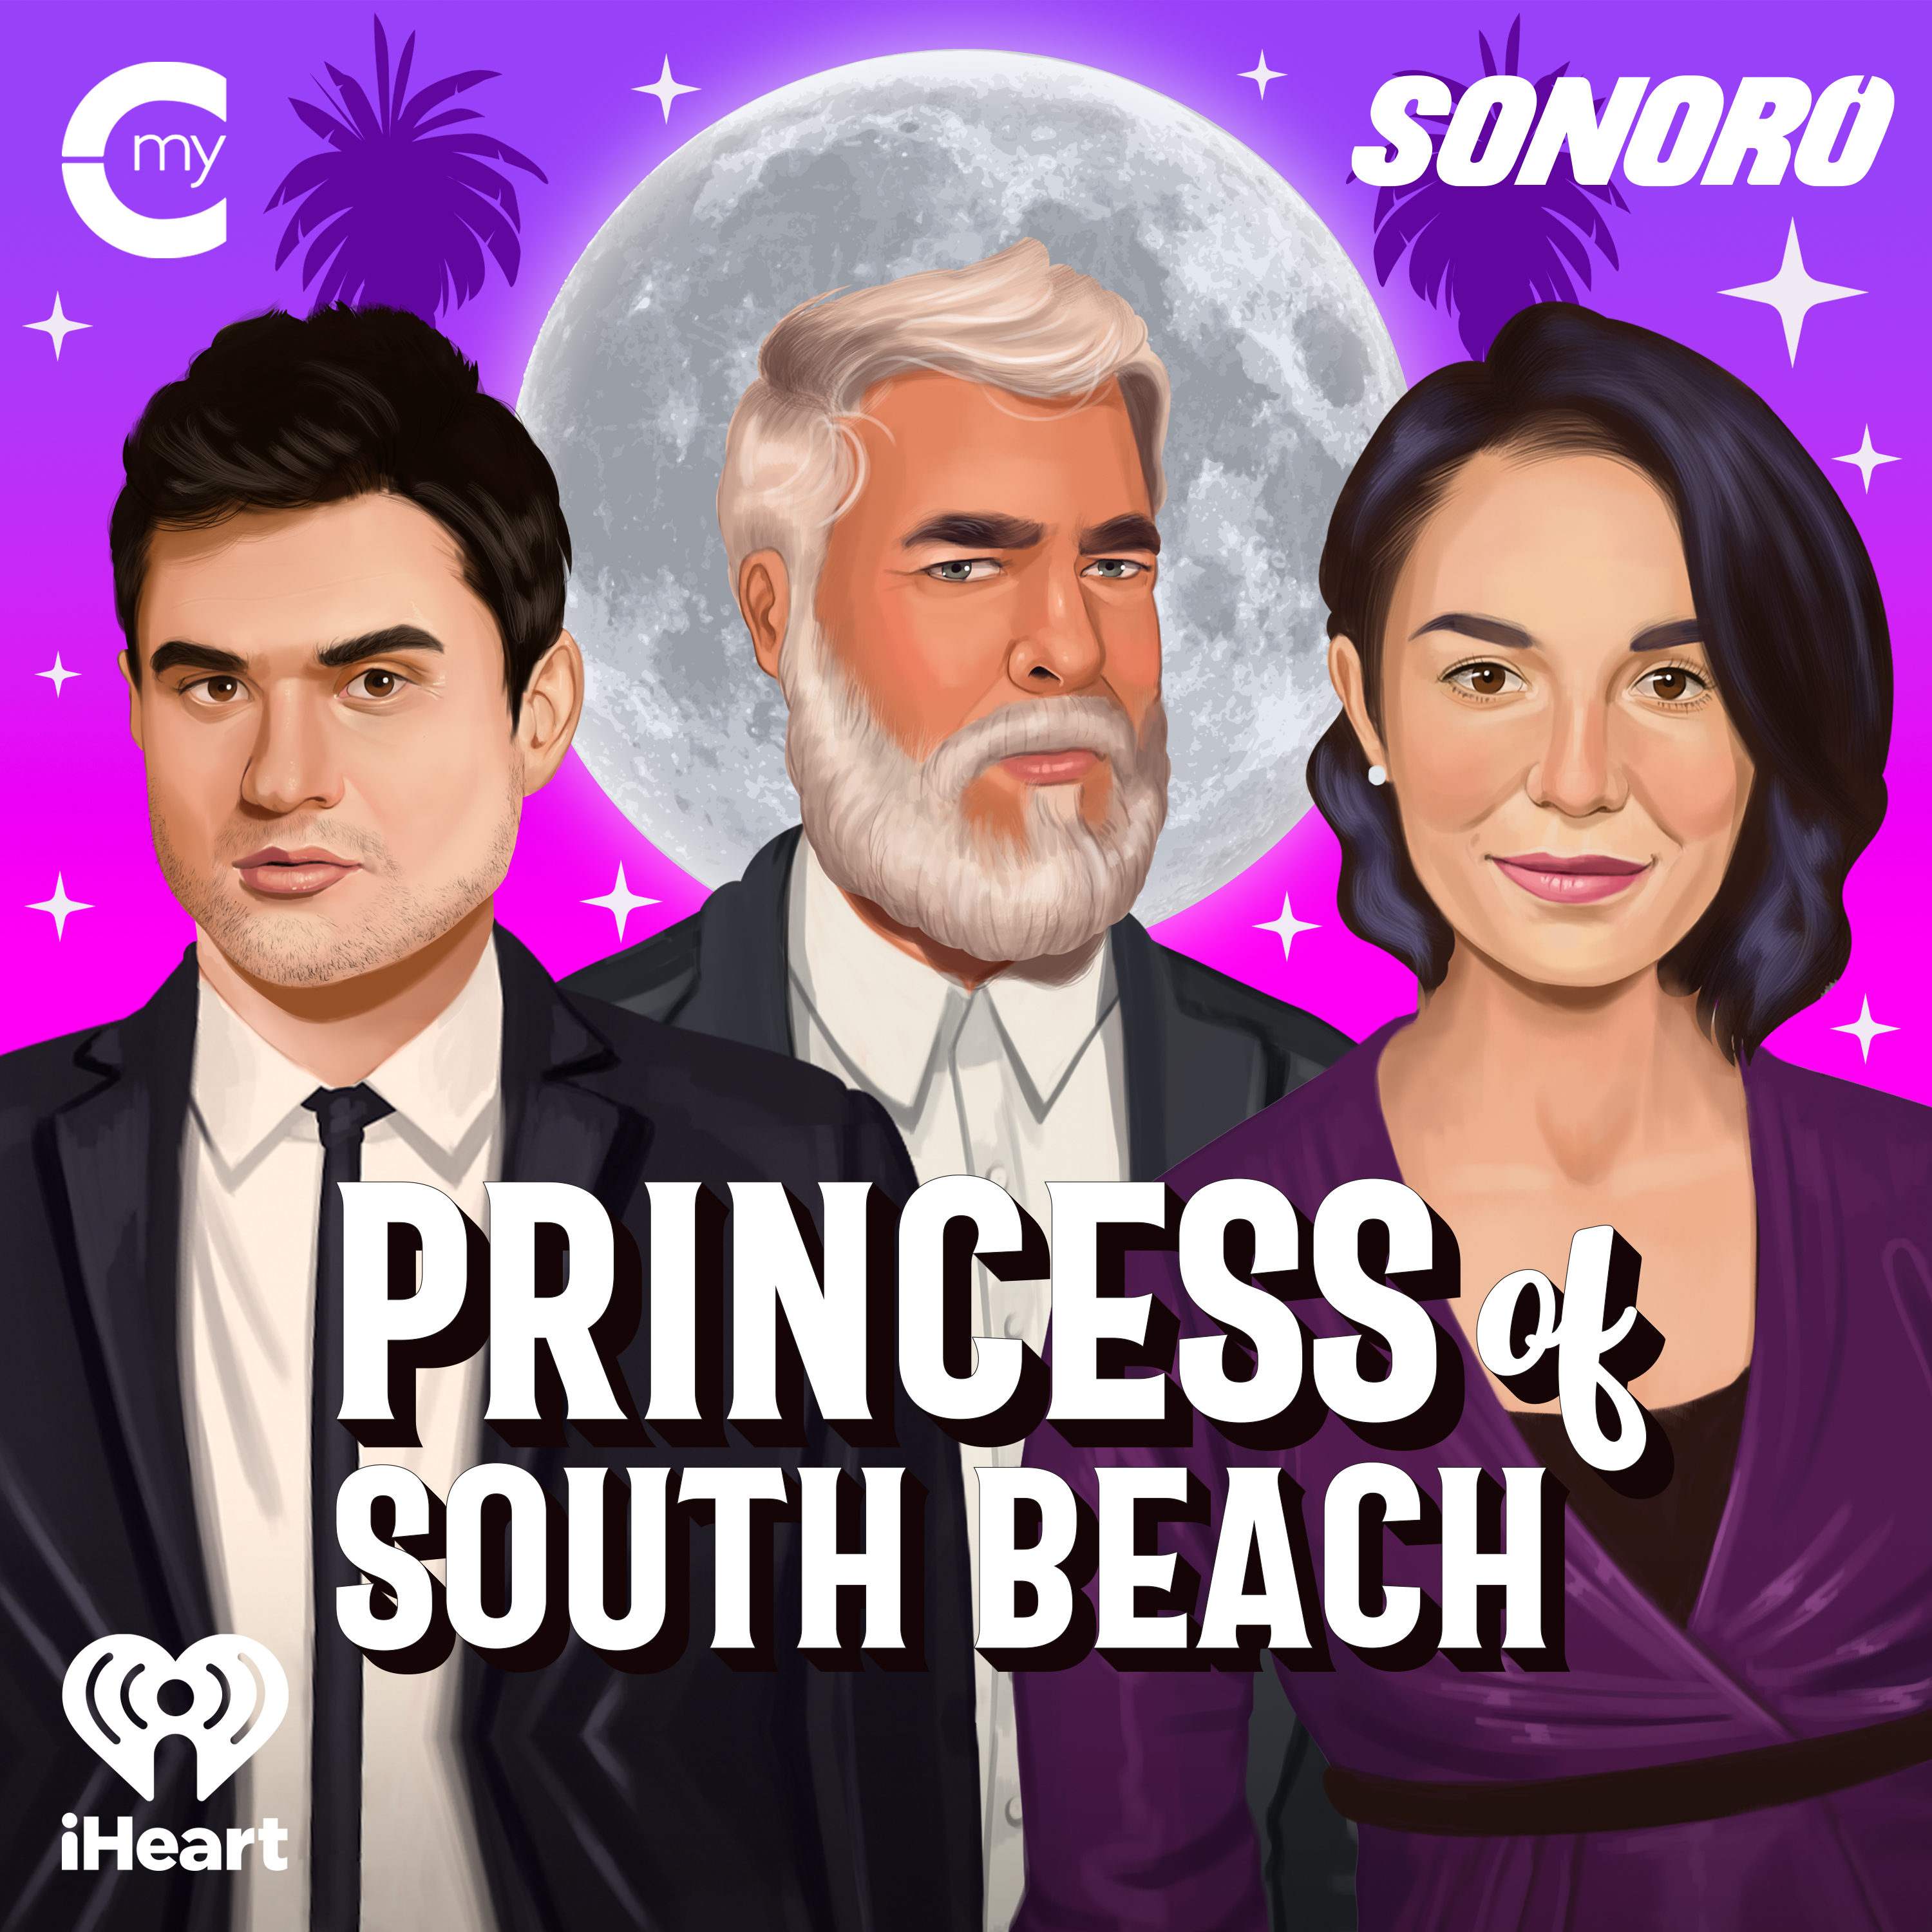 La Princesa de South Beach: Tras Bambalinas